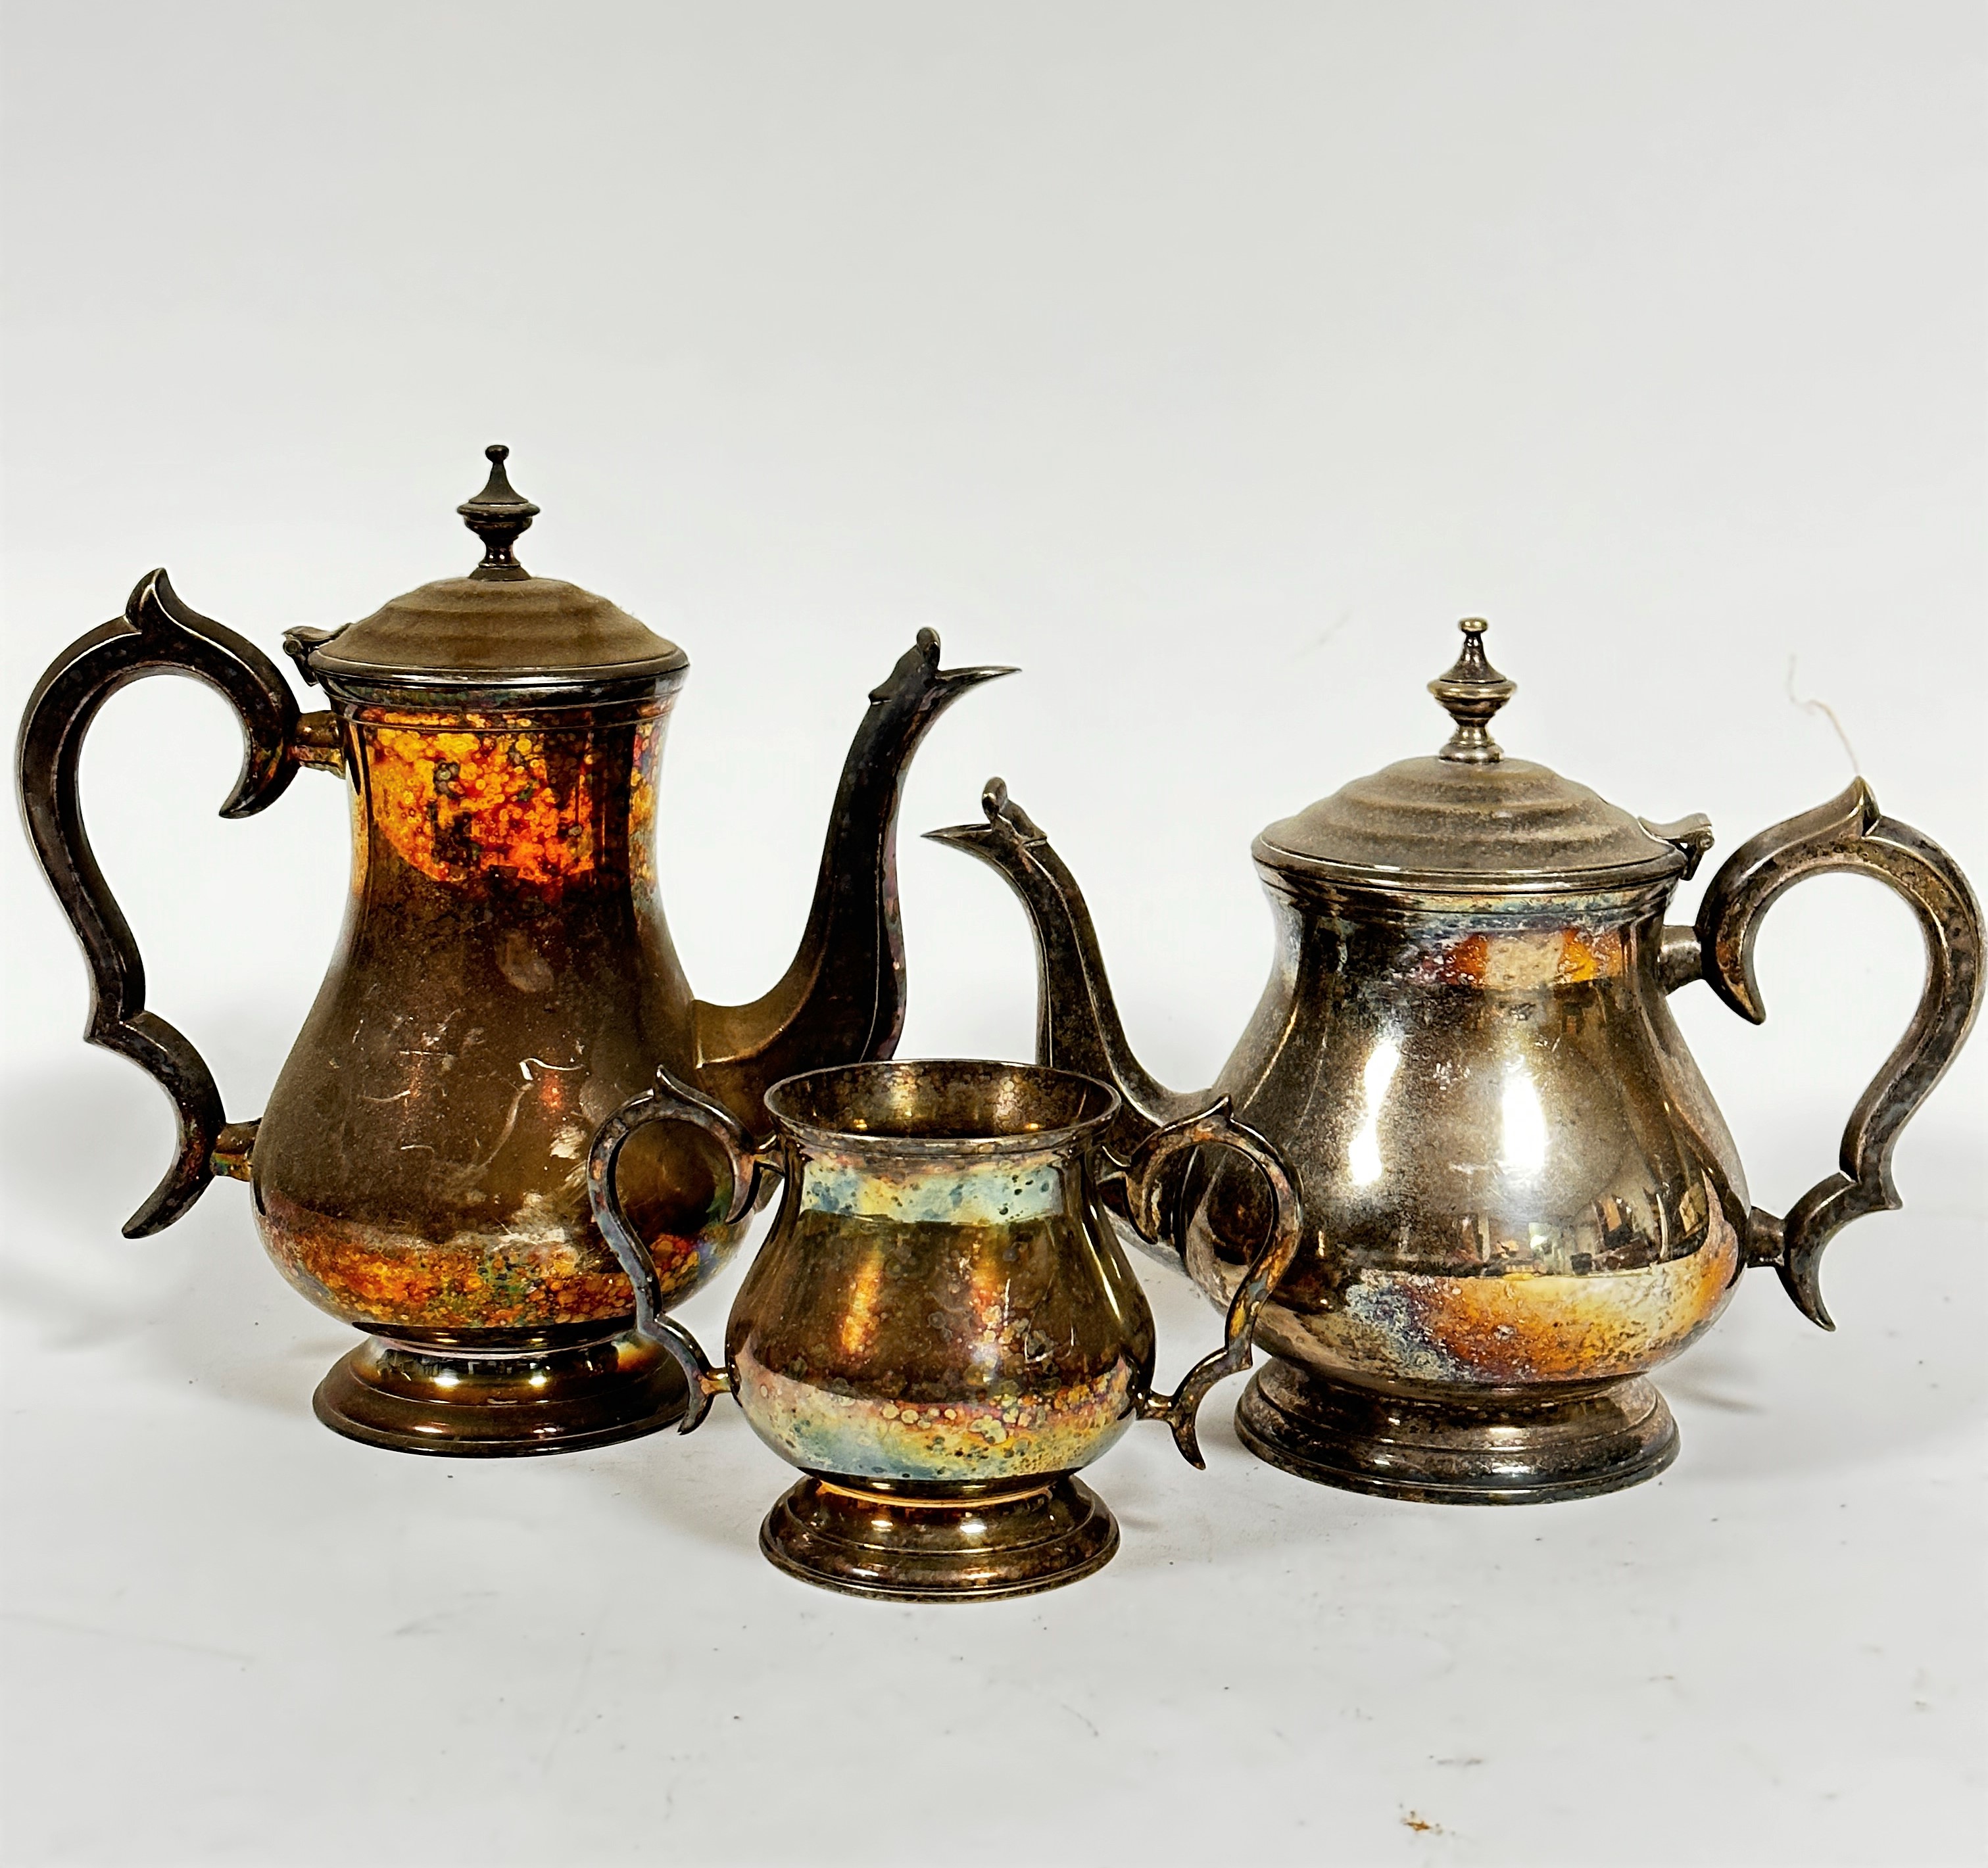 An Epns baluster three piece part teaset including hot water pot (24cm), tea pot and two handled